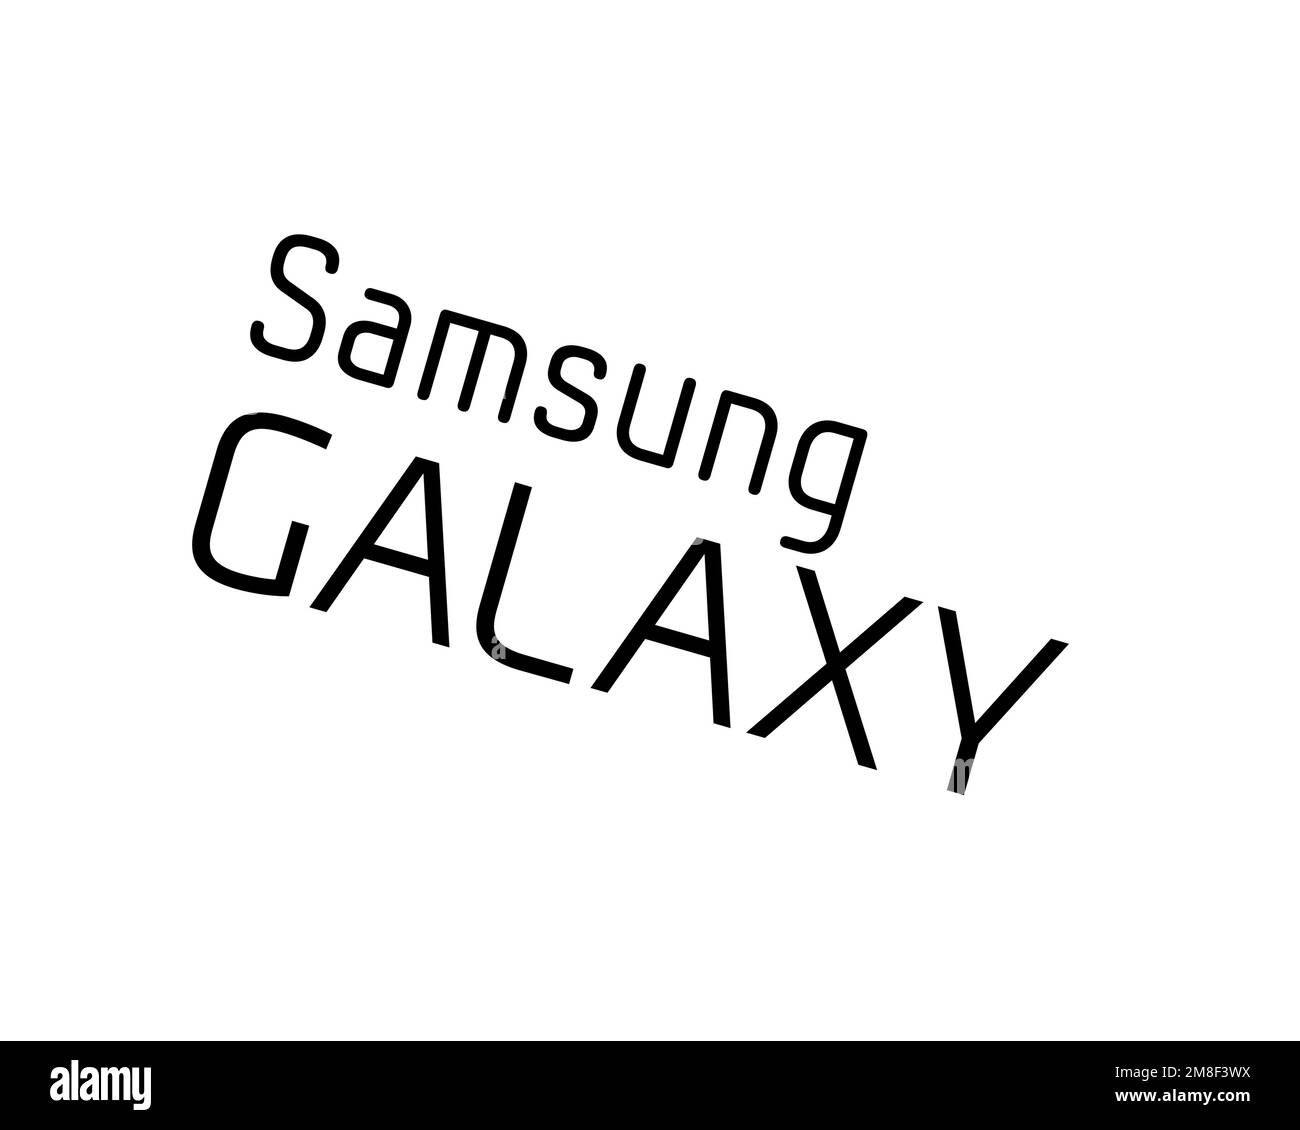 Samsung Galaxy original, rotated logo, white background B Stock Photo